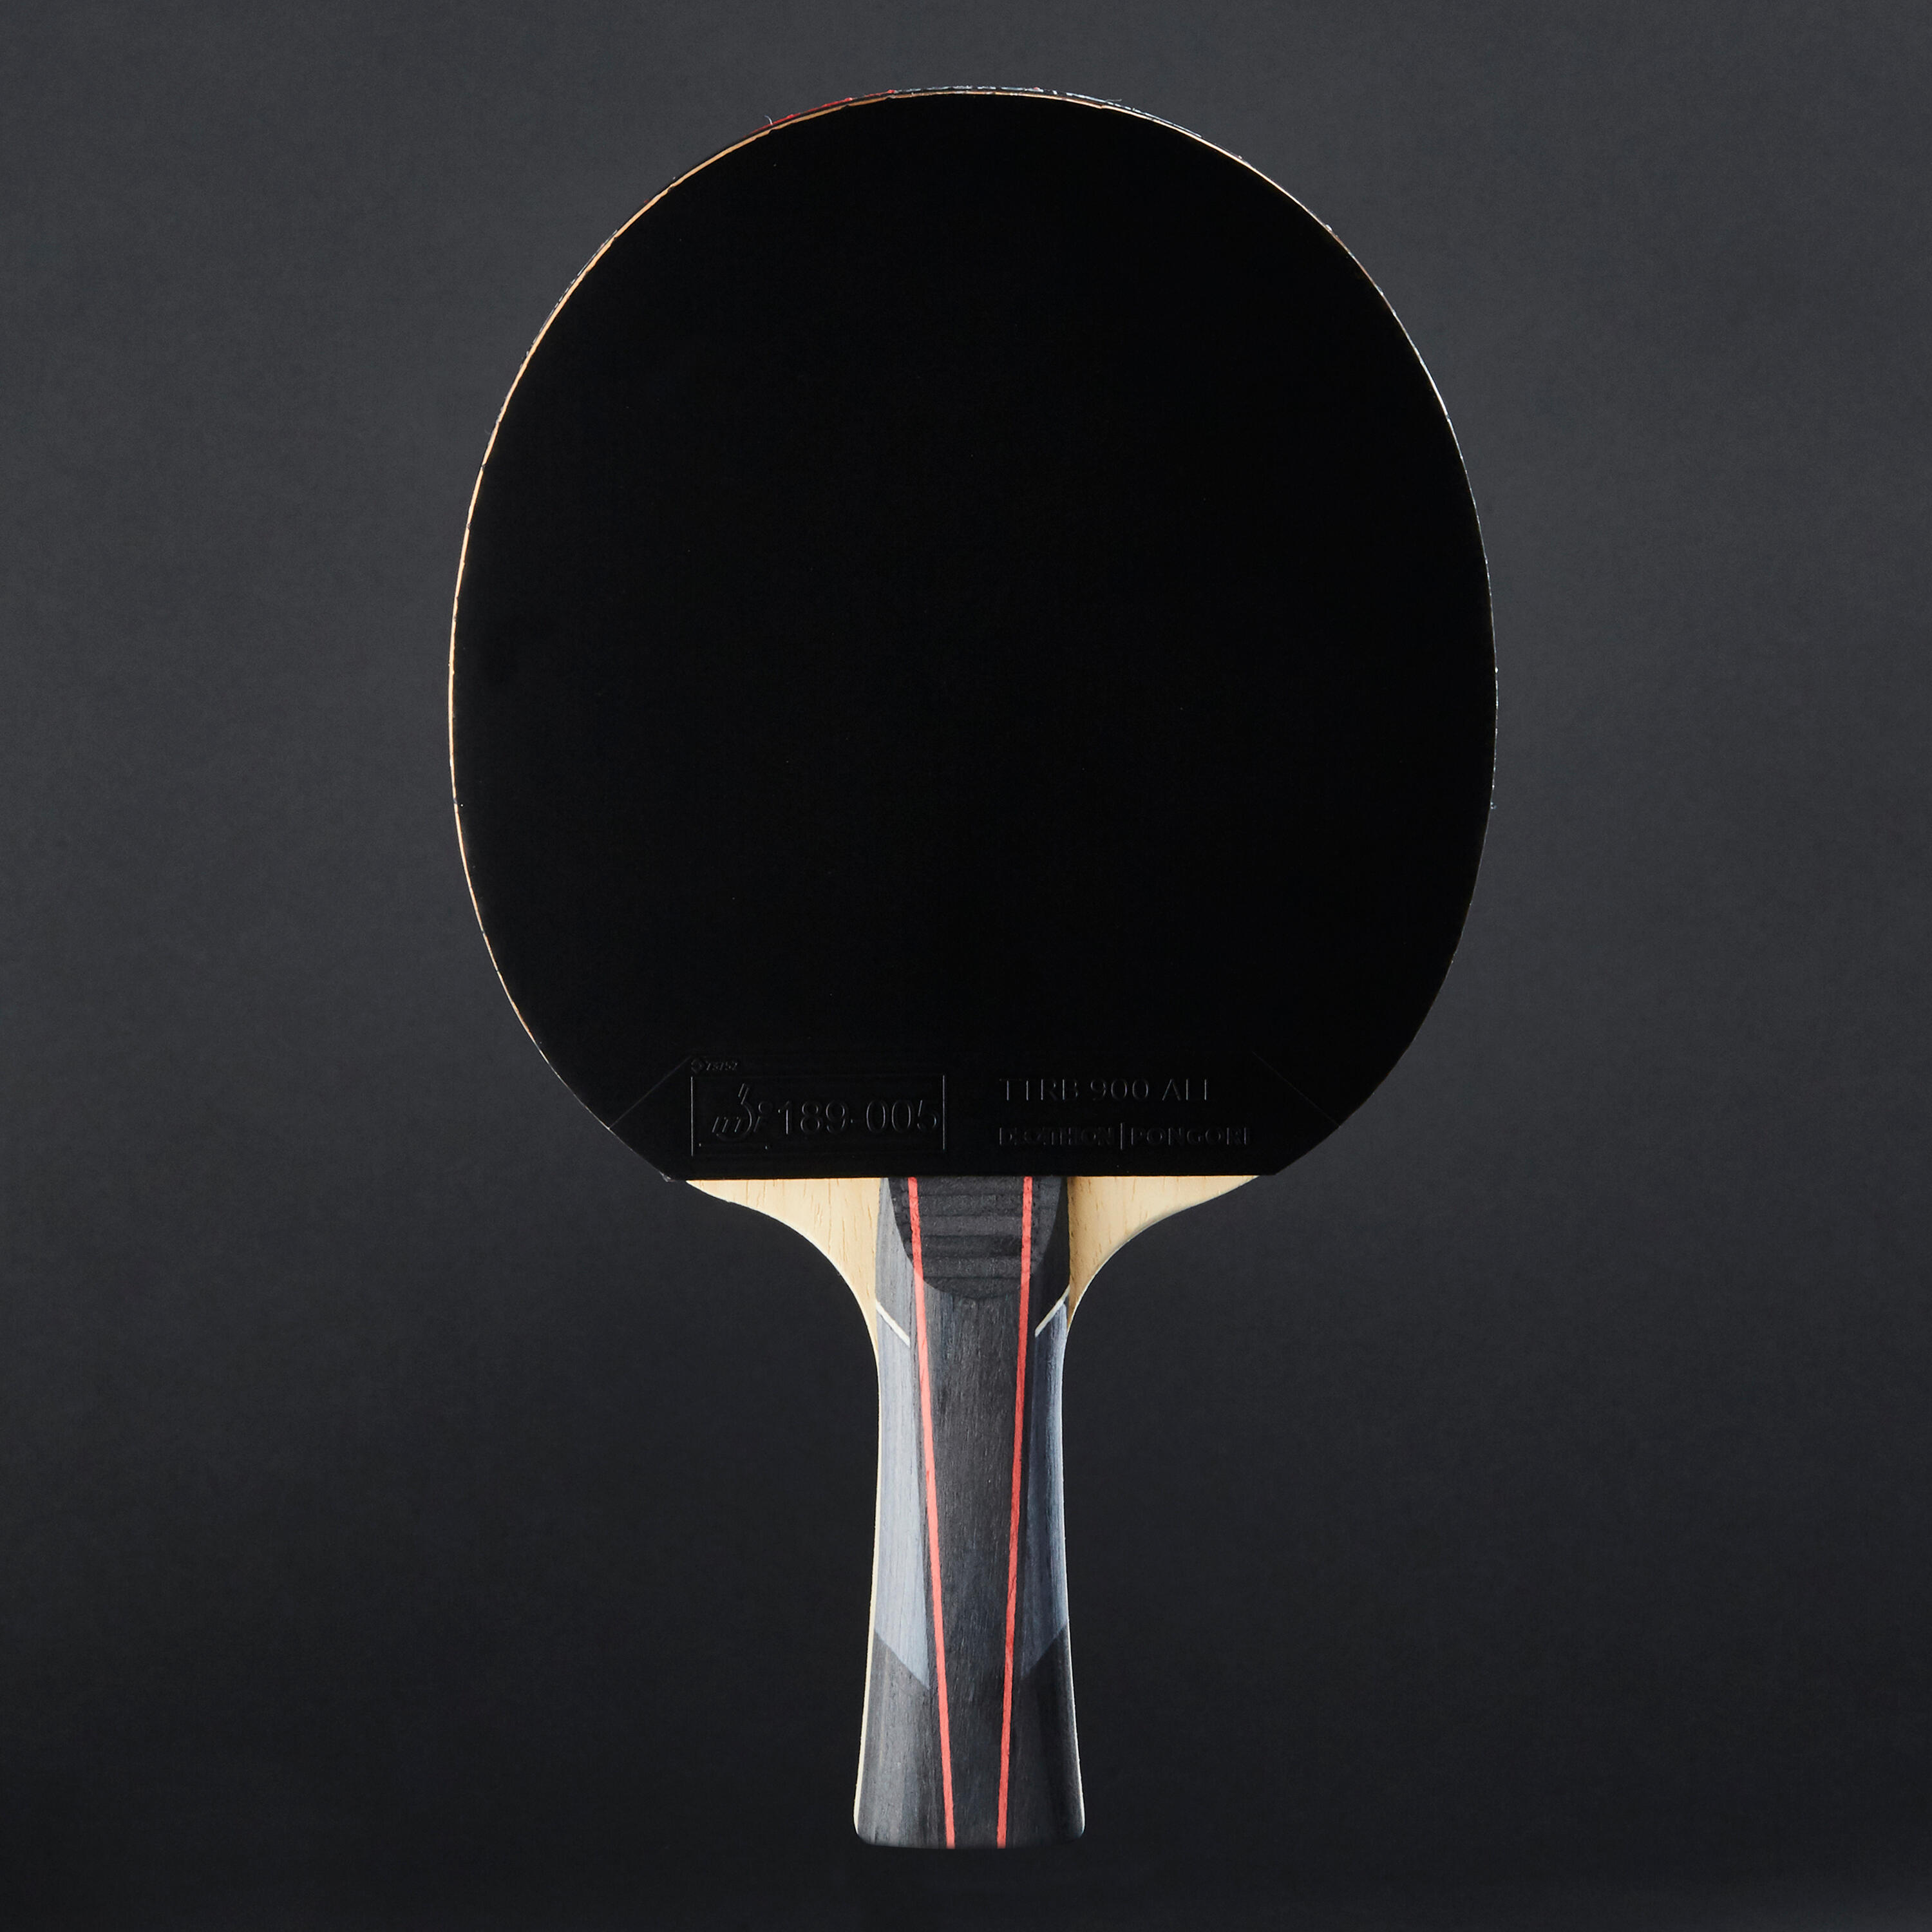 Club Table Tennis Bat - TTR 900 All - PONGORI